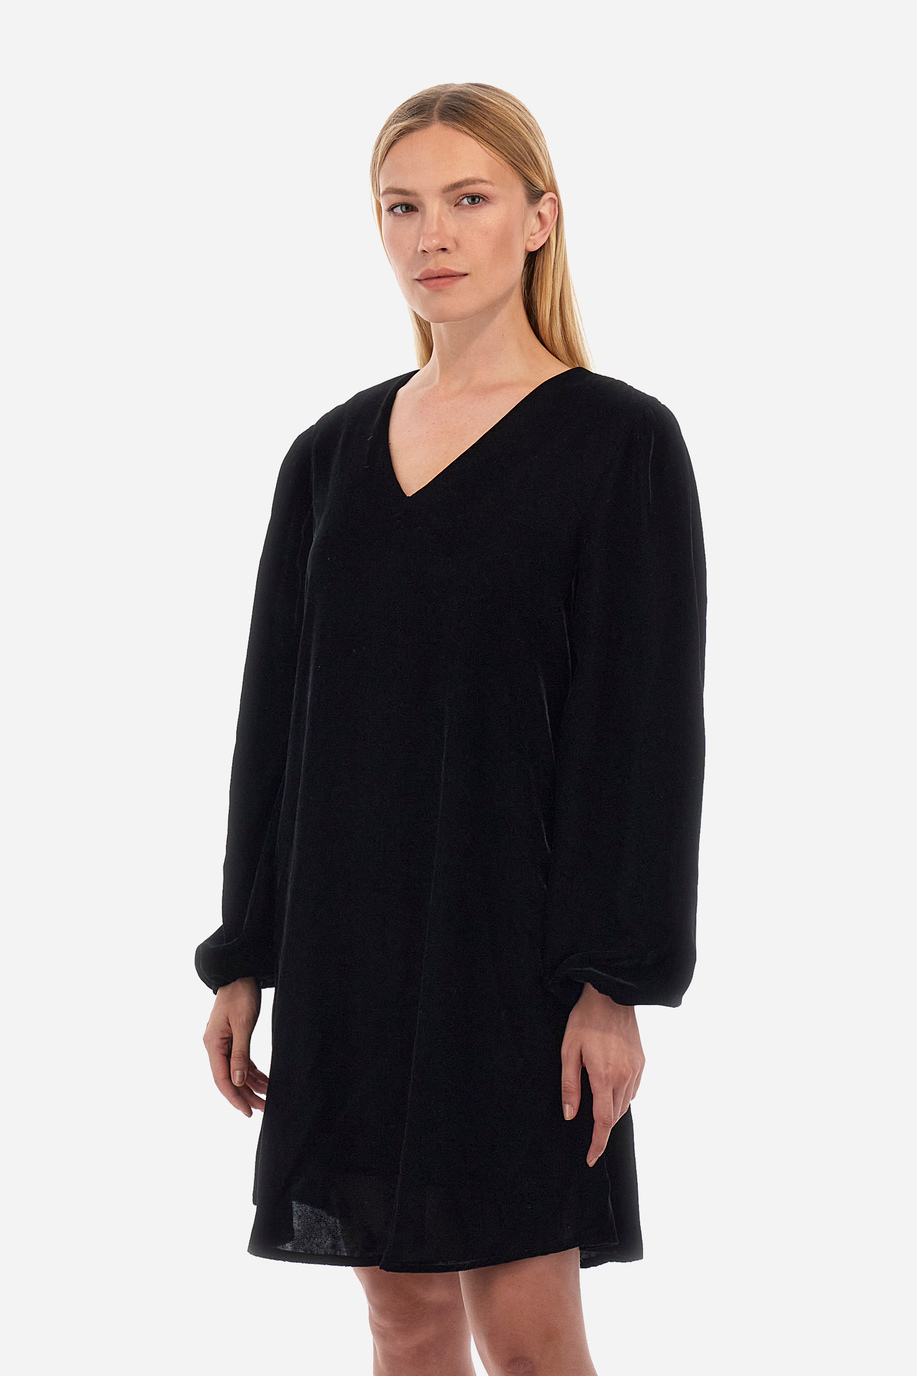 Robe femme coupe classique - Walberga - Robes | La Martina - Official Online Shop